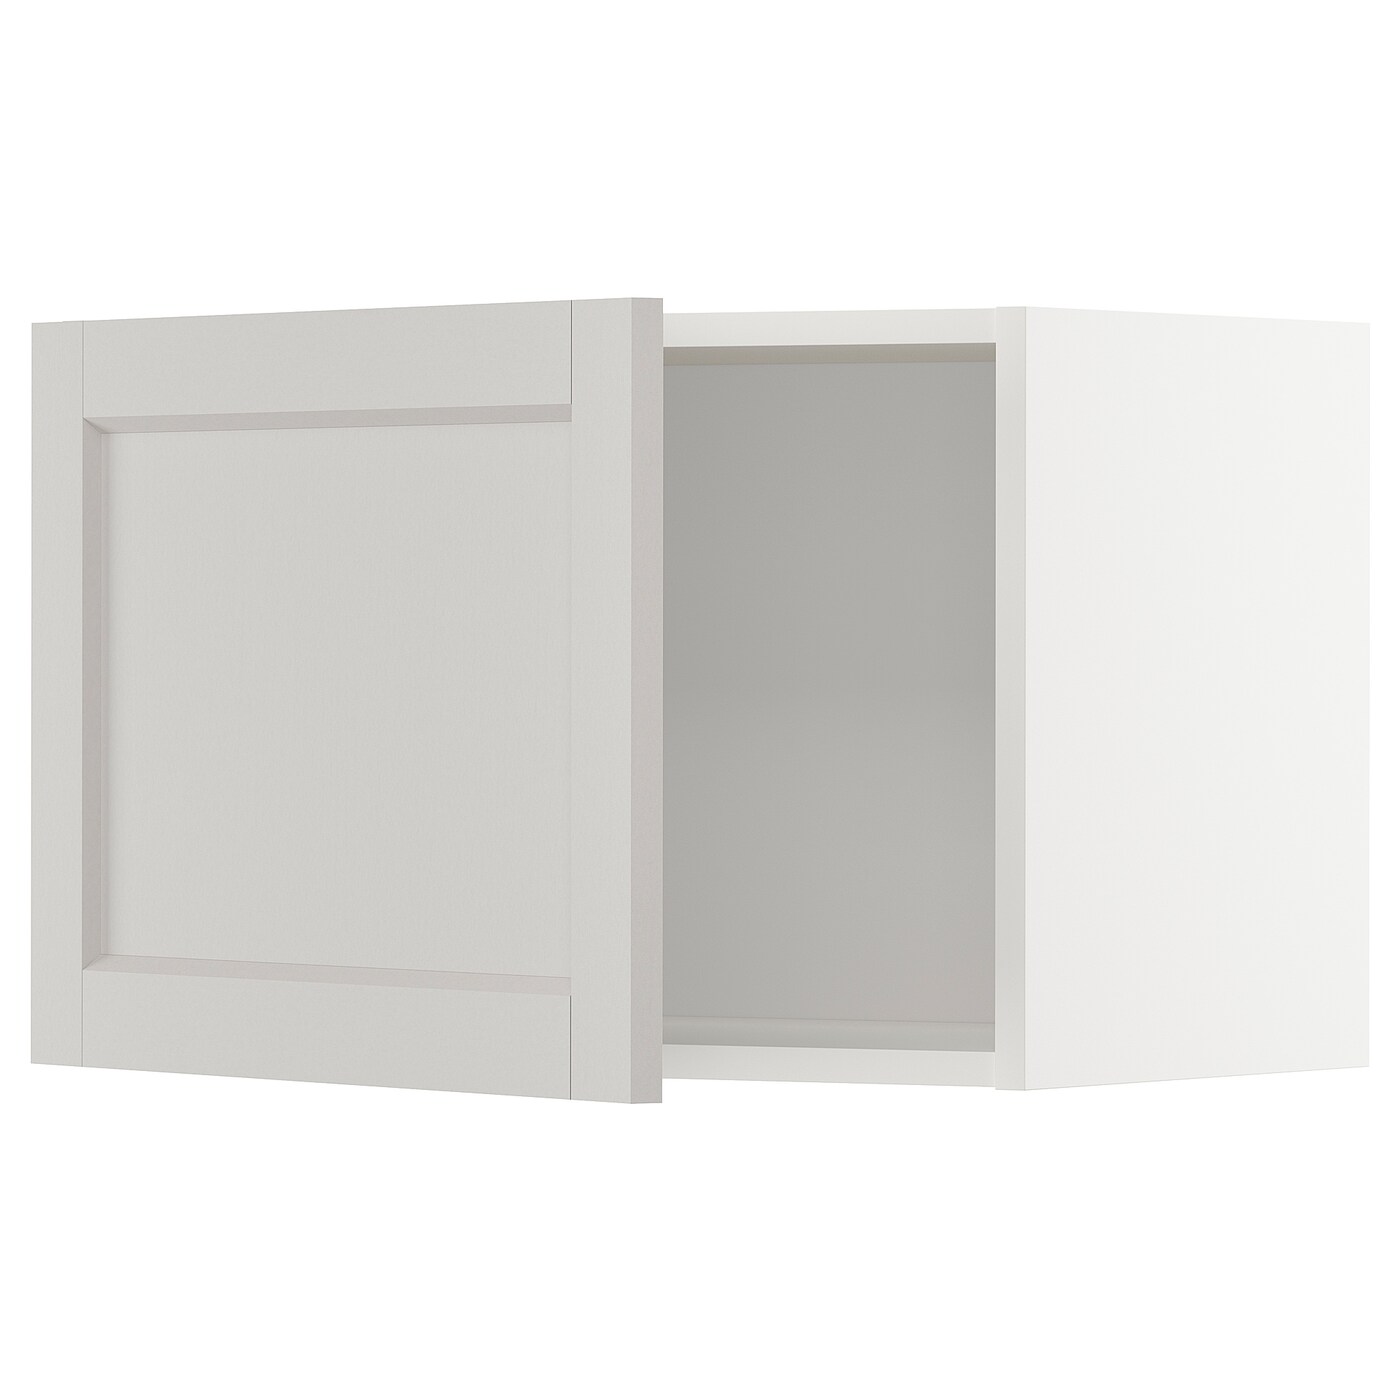 METOD Навесной шкаф - METOD IKEA/ МЕТОД ИКЕА, 40х60 см, белый/светло-серый